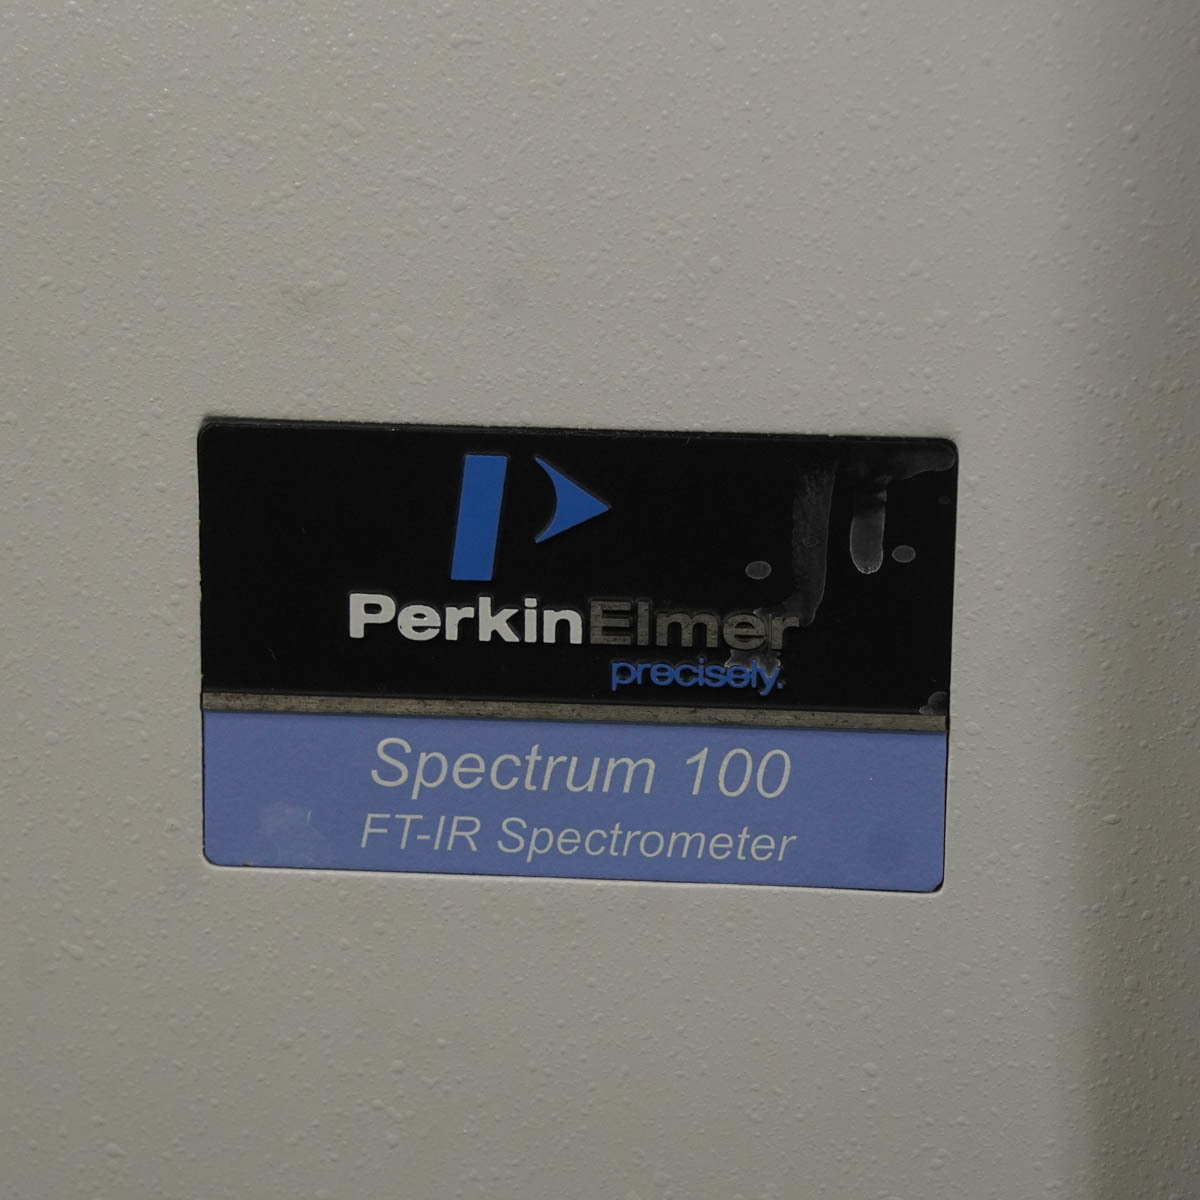 [DW]8日保証 セット Spectrum 100 Spotlight 400 Perkin Elmer パーキンエルマー FT-IR Spectrometer FT-IR imaging System...[05227-0001]_画像3